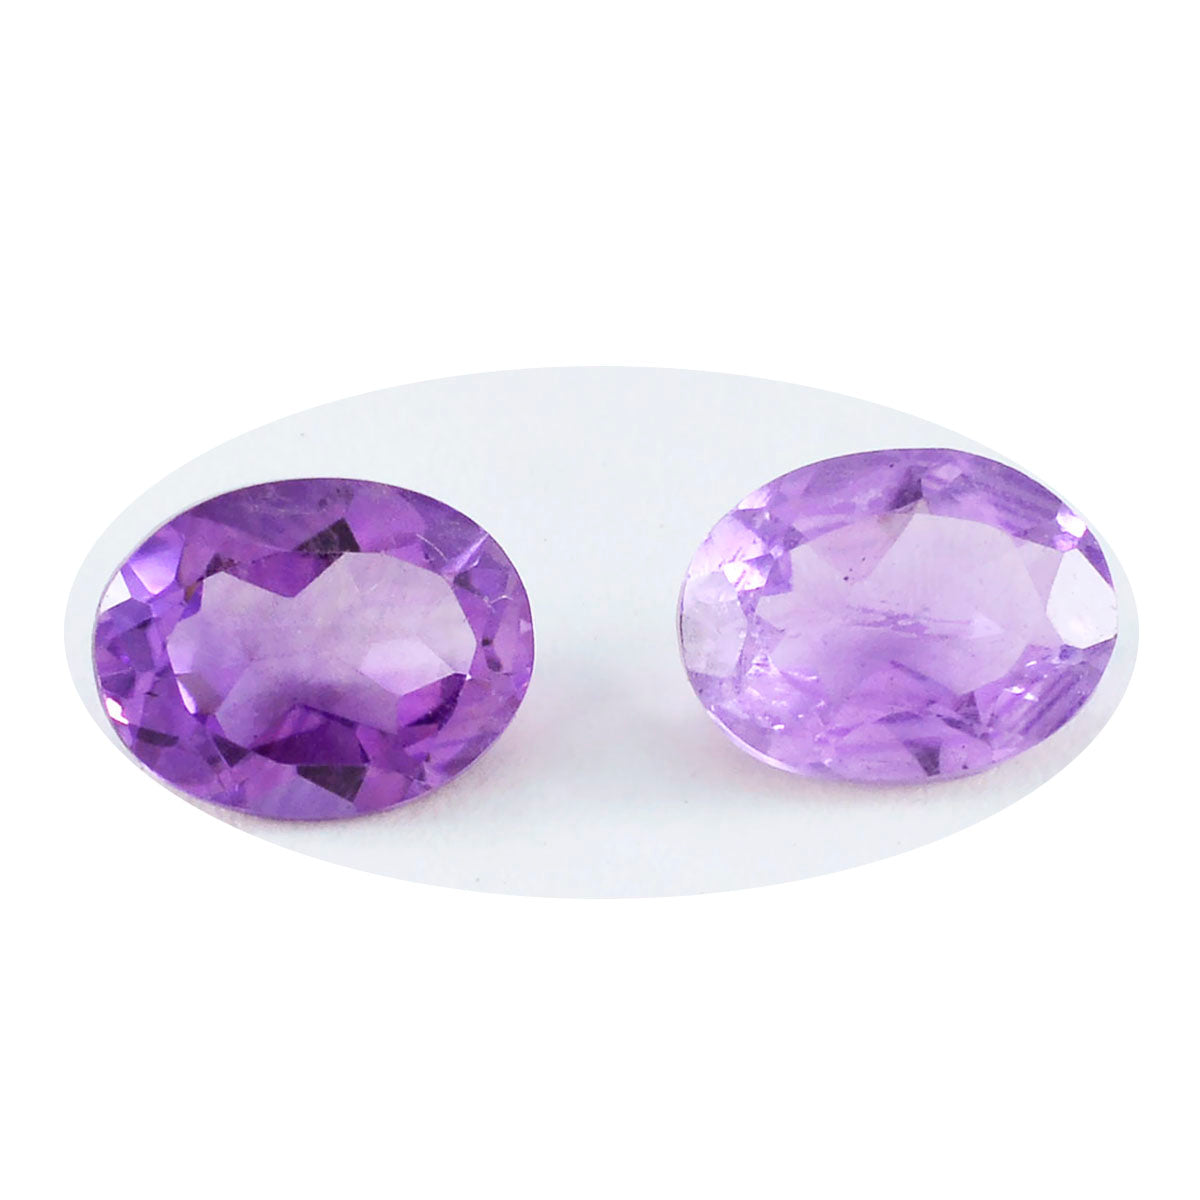 Riyogems 1PC Real Purple Amethyst Faceted 7x9 mm Oval Shape A1 Quality Gems